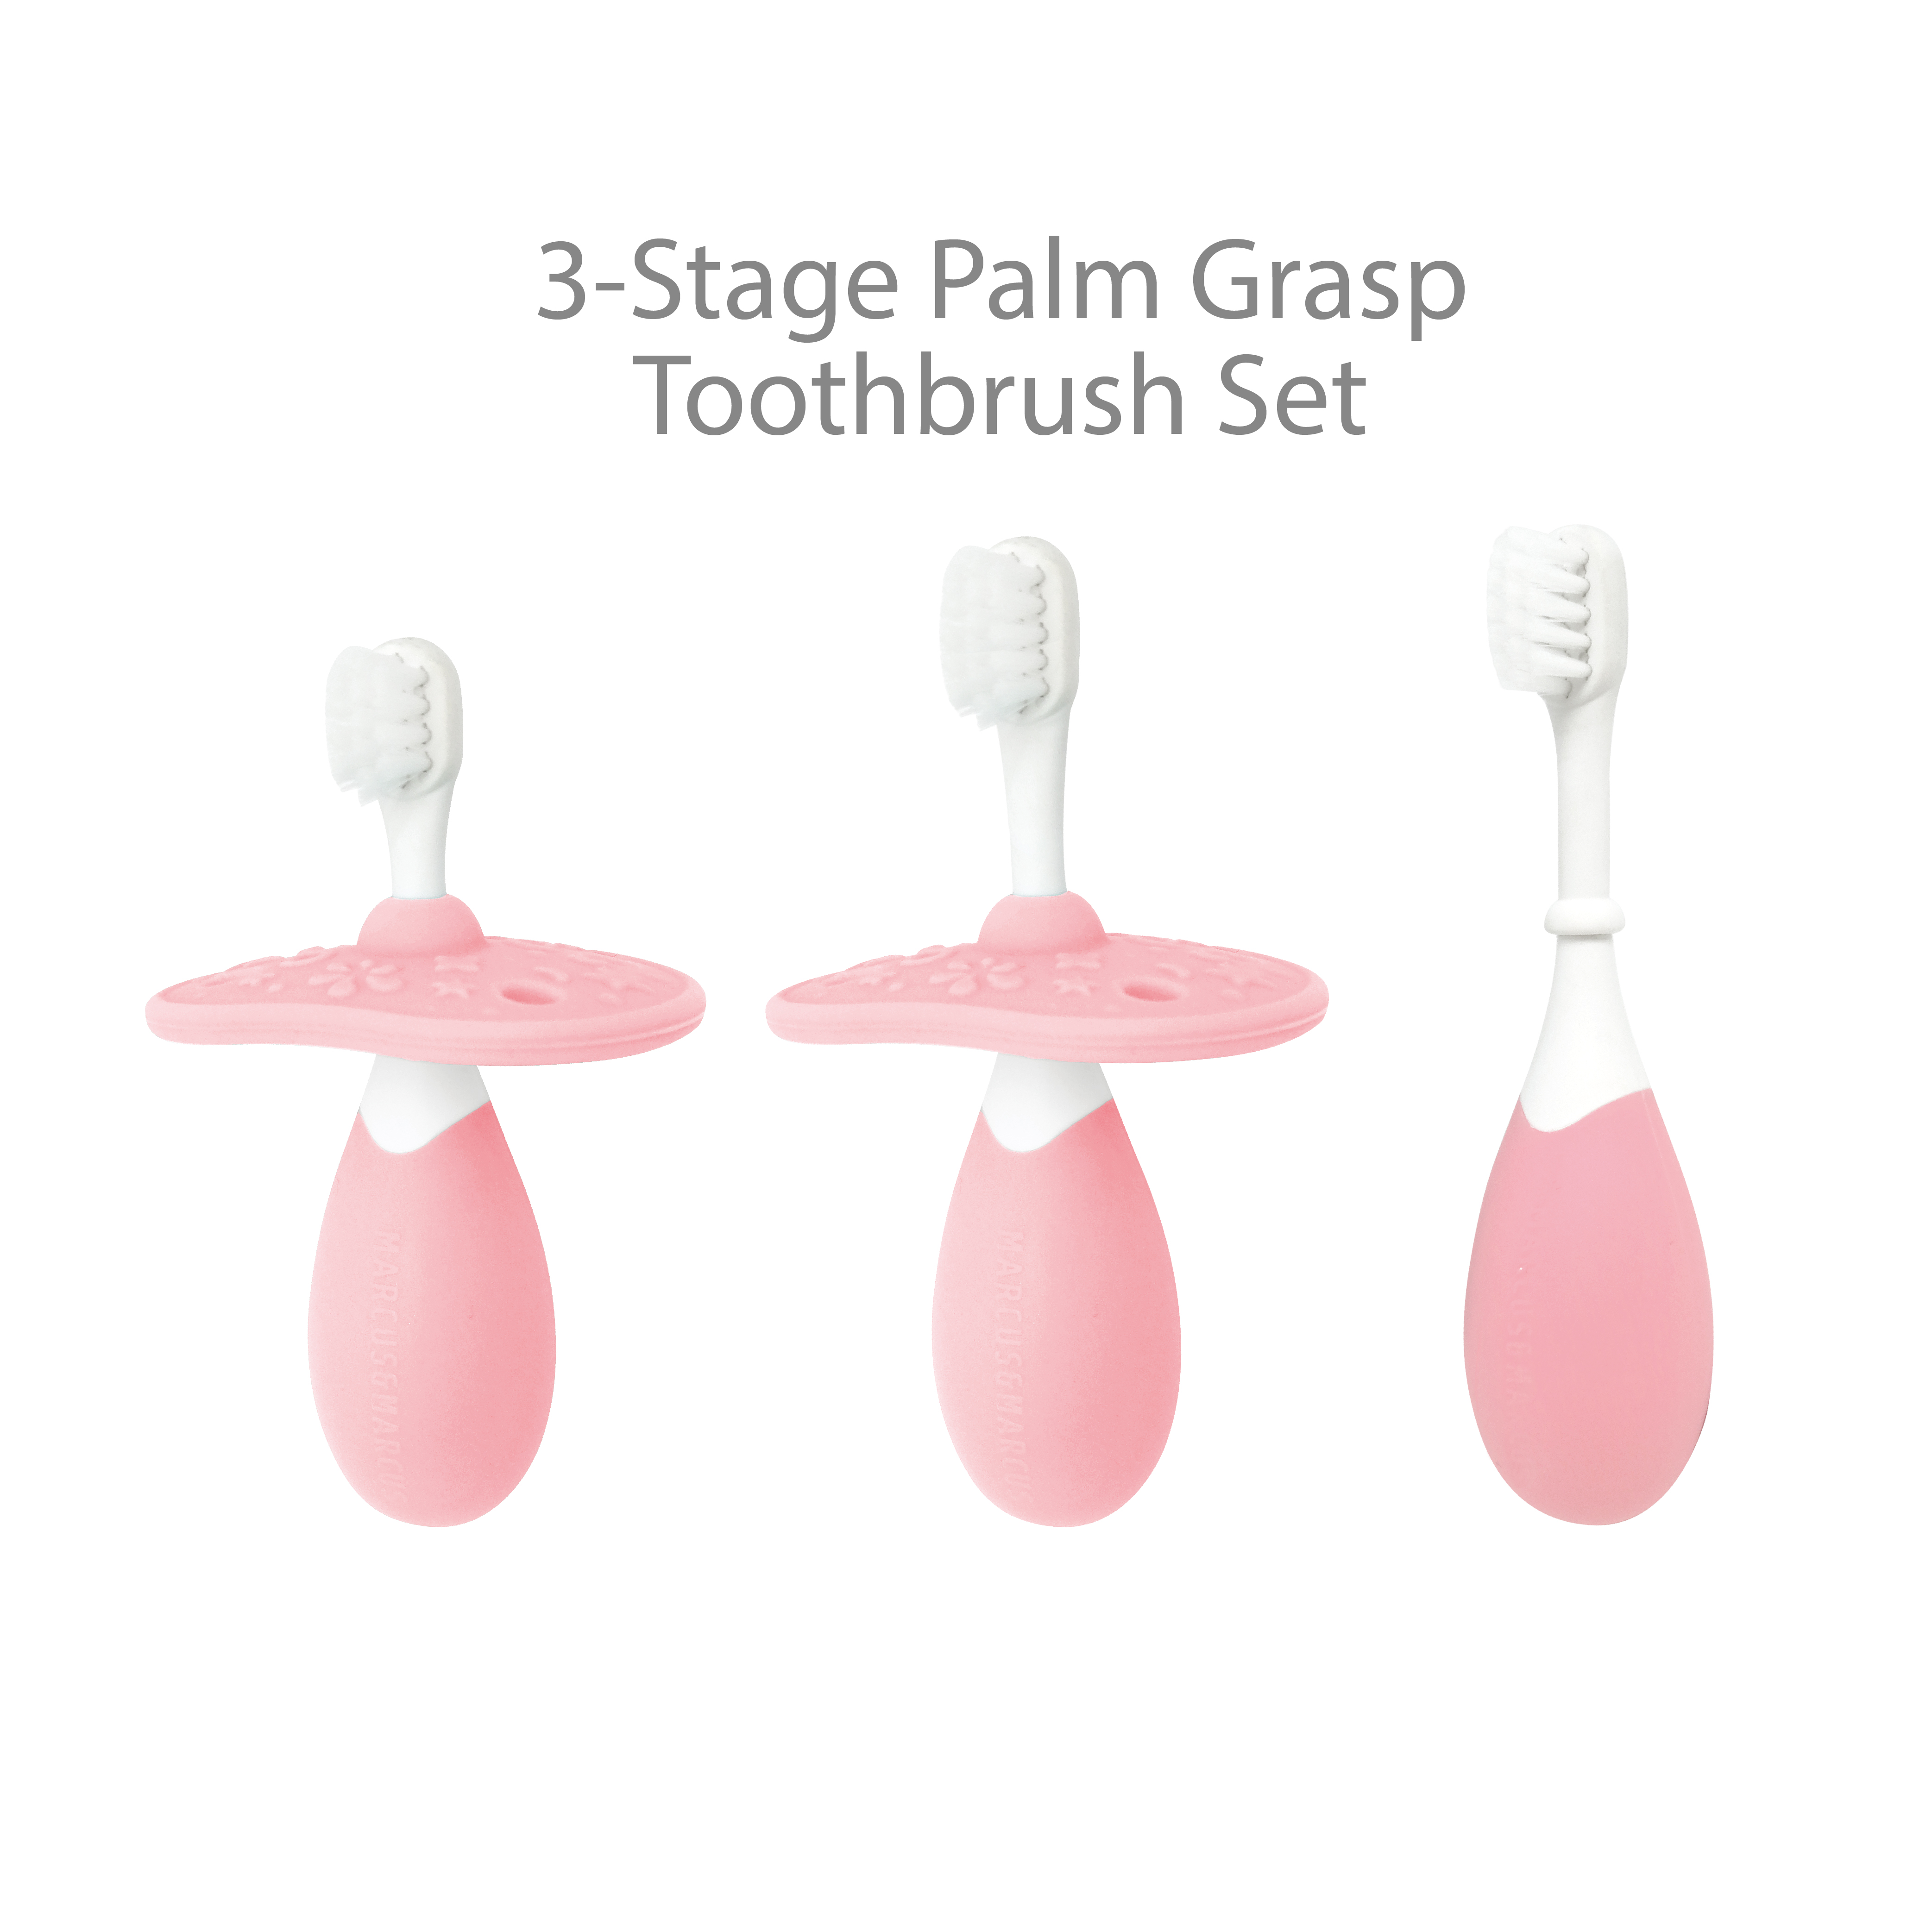 3 Stage Palm Grasp Toothbrush_04.jpg